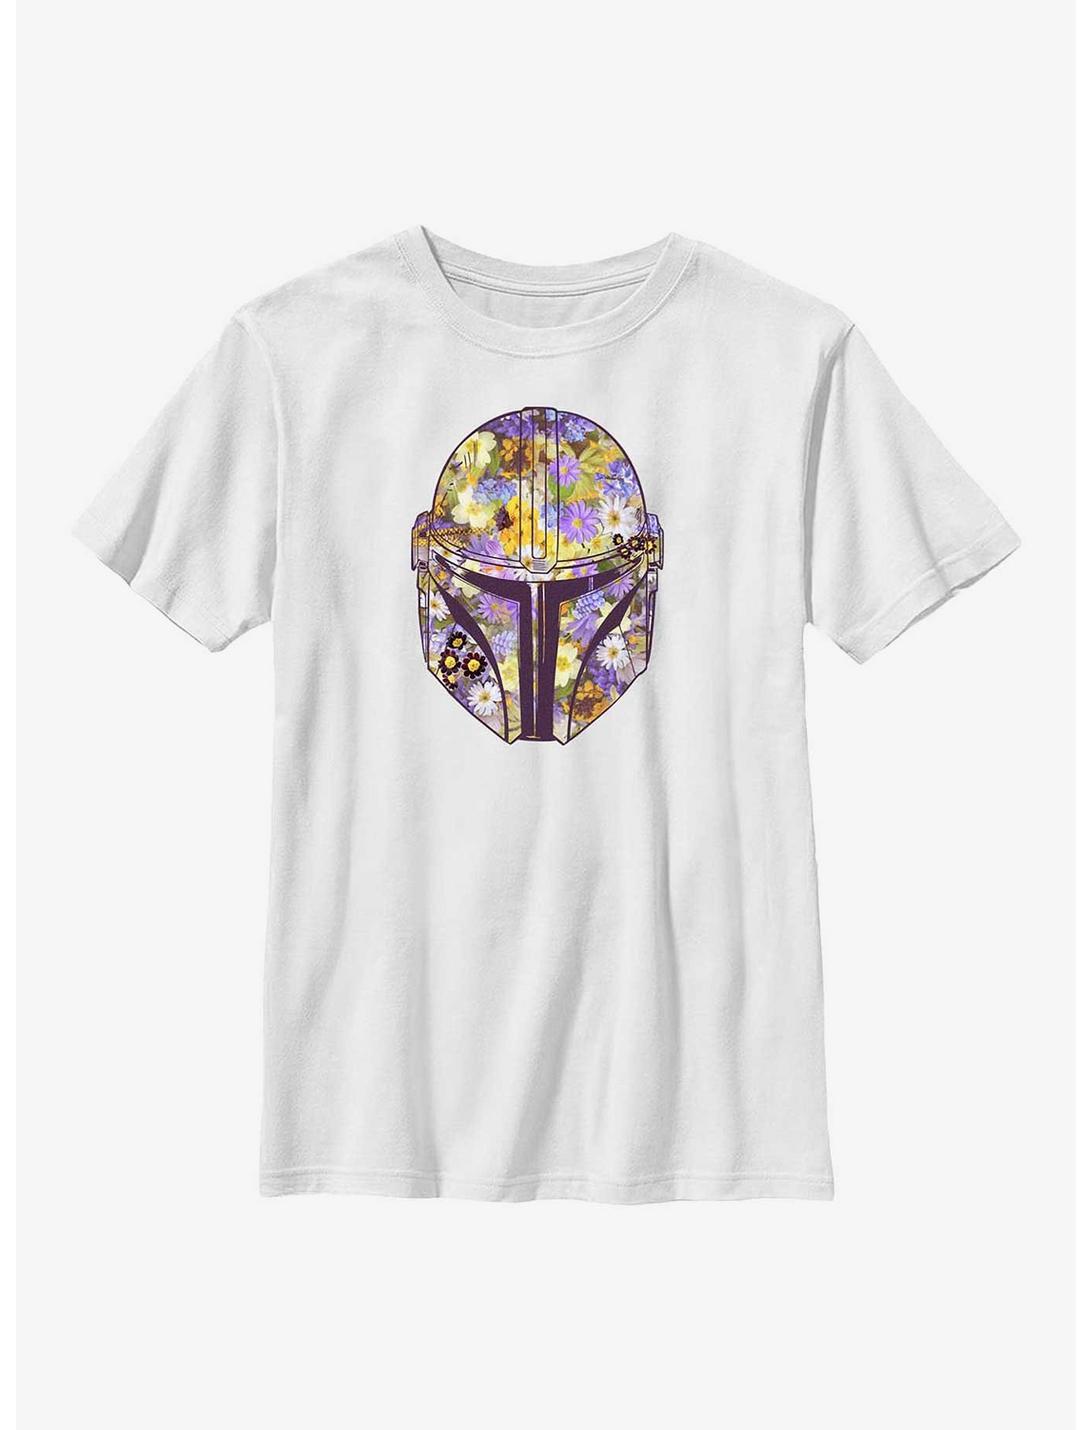 Star Wars The Mandalorian Floral Helmet Youth T-Shirt, WHITE, hi-res